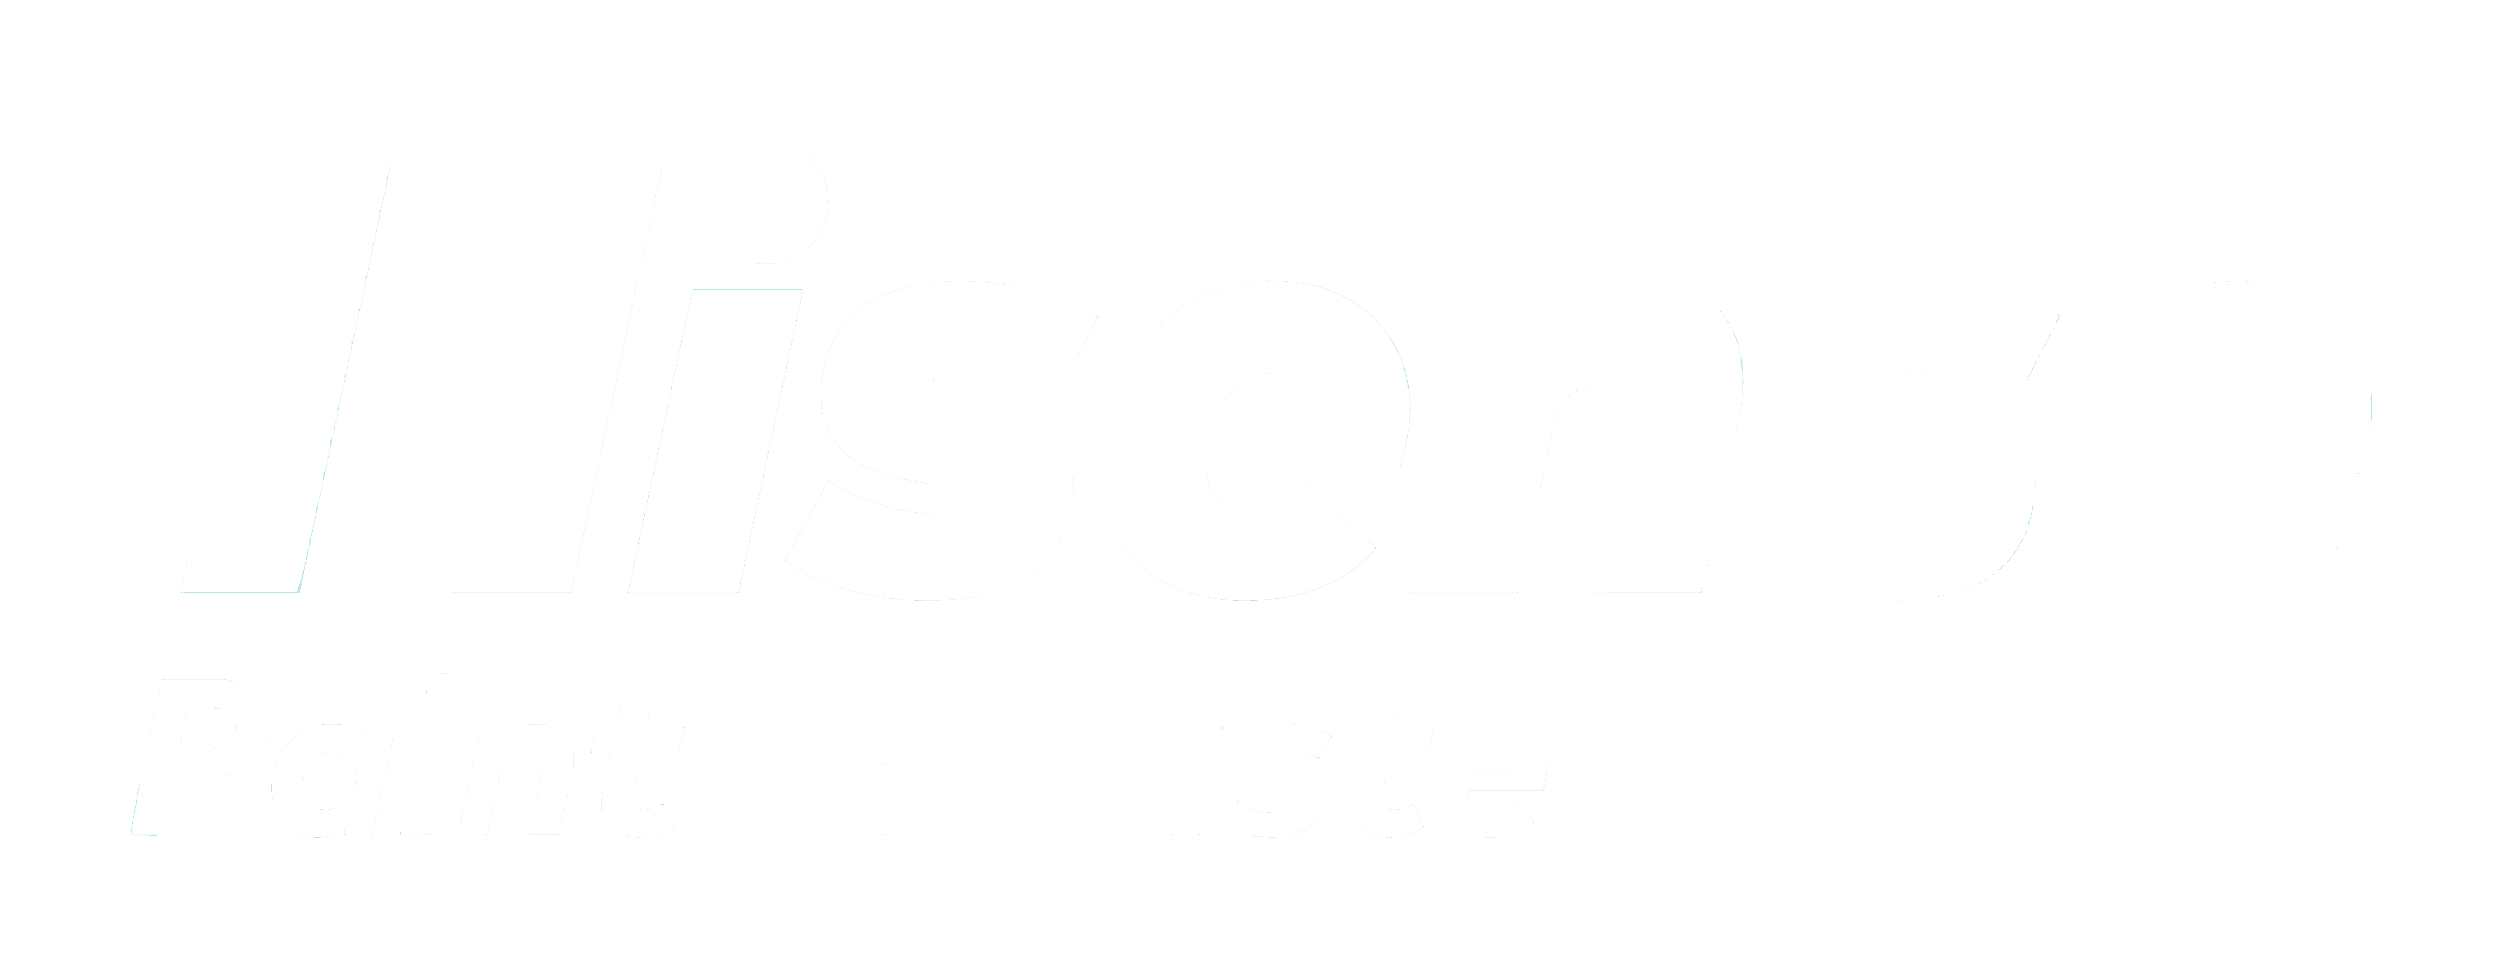 Hisense Paint and Paste White Transparent Logo minimum size